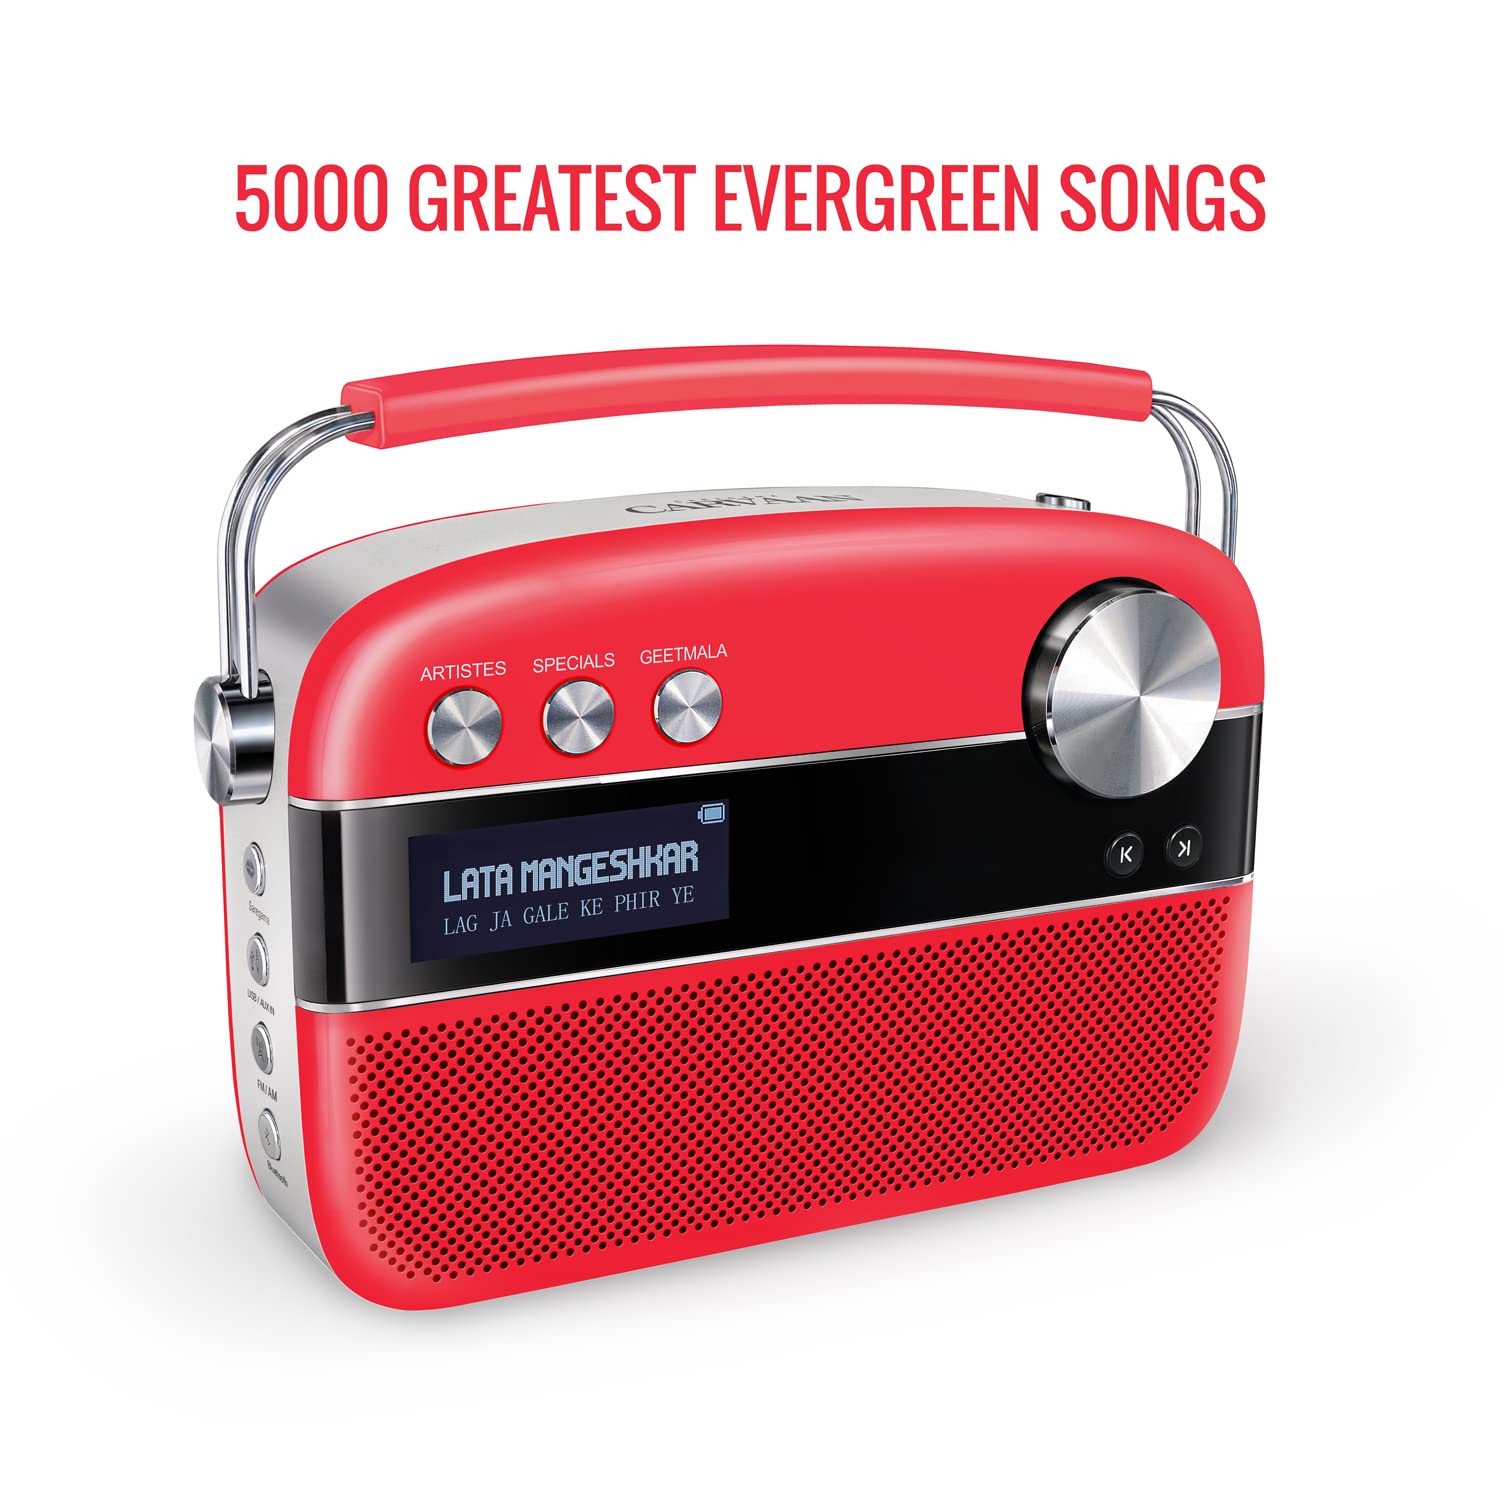 Saregama Carvaan Premium (Pop Colour Range) Hindi - Portable Music Player with 5000 Preloaded Songs, FM/BT/AUX (Coral Pink)